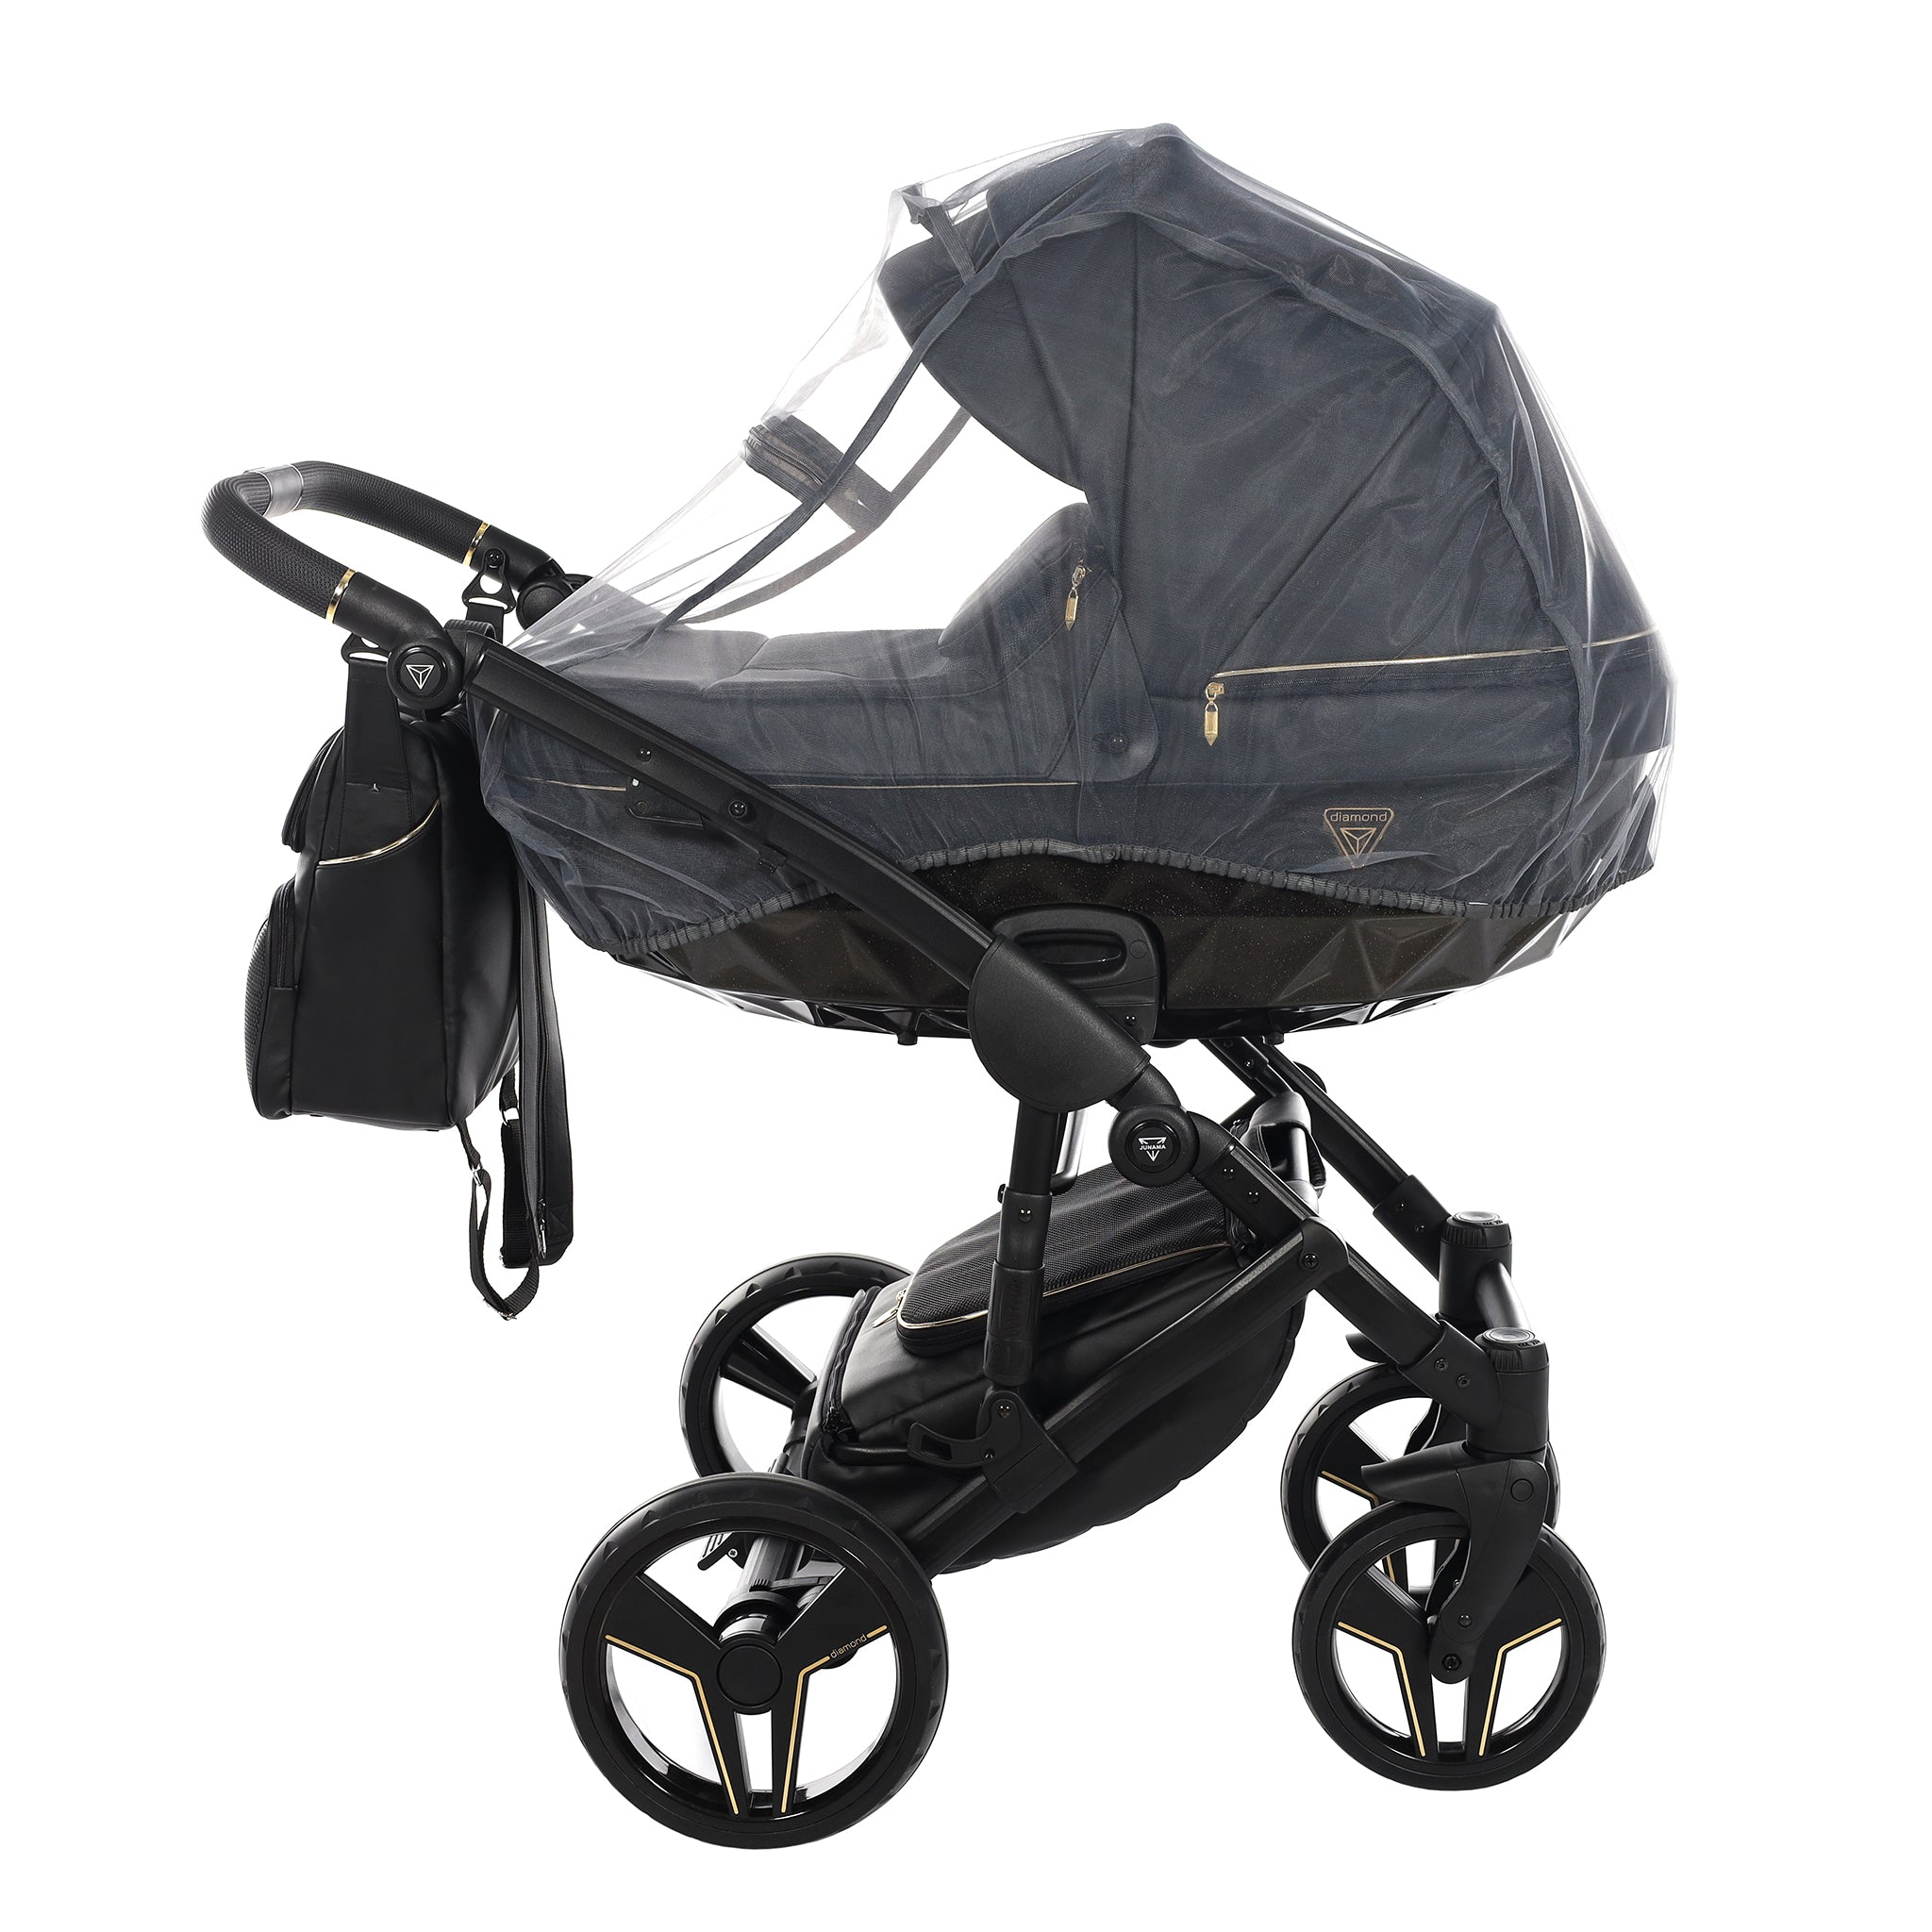 Junama S Class, baby prams or stroller 2 in 1 - Black and Black, Code number: JUNSC07